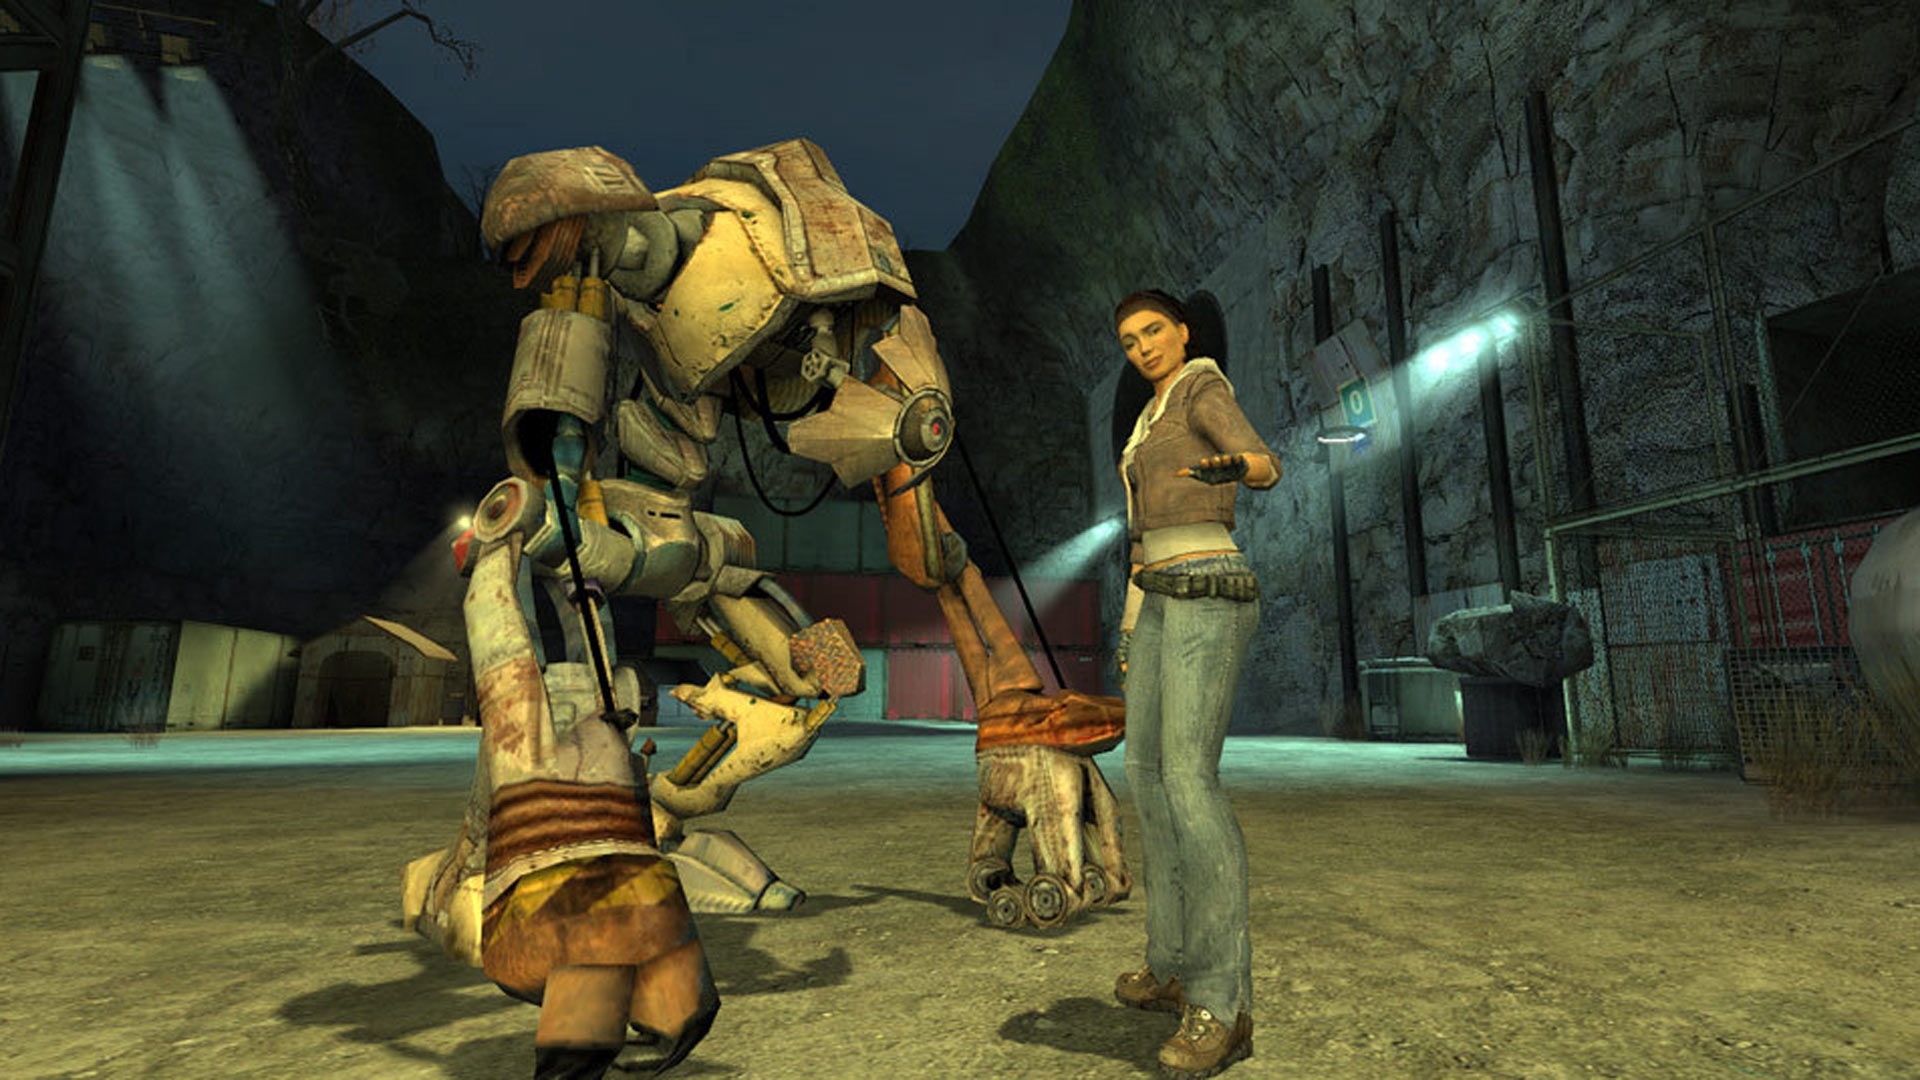 Valve reveals VR game 'Half-Life: Alyx' is on its way